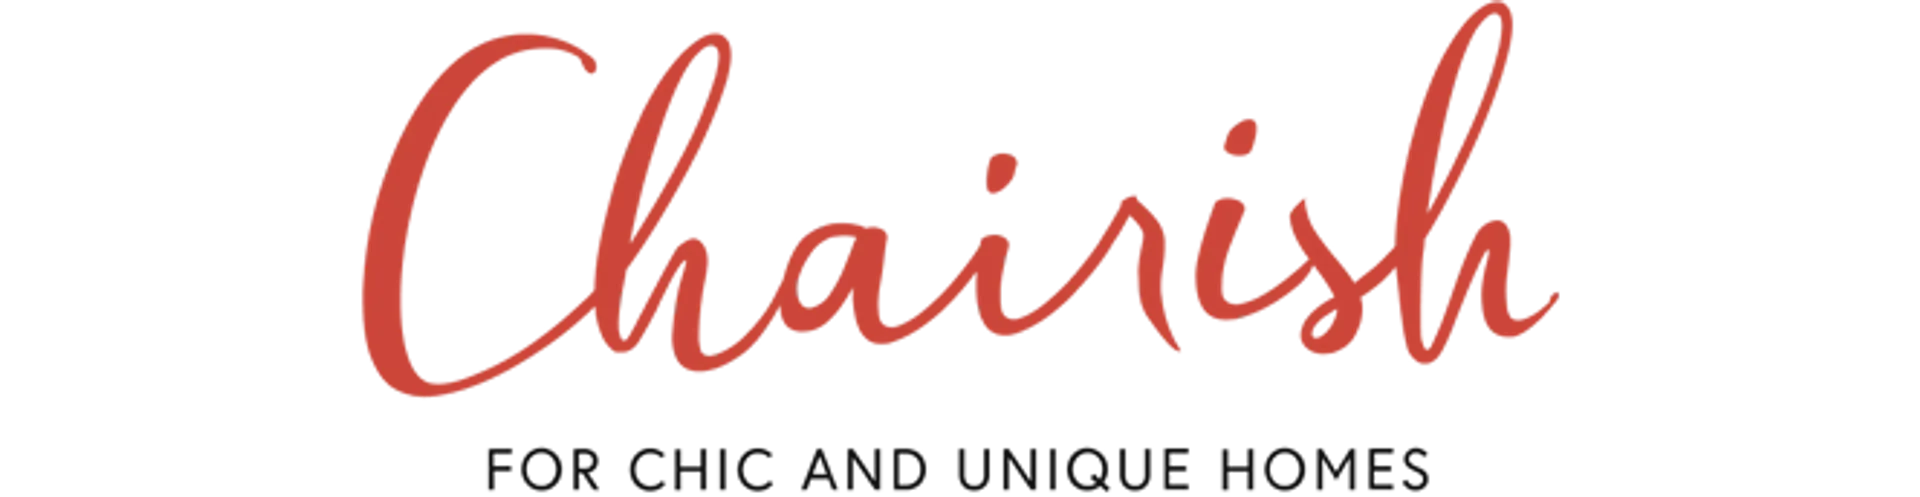 CHAIRISH logo. Current weekly ad